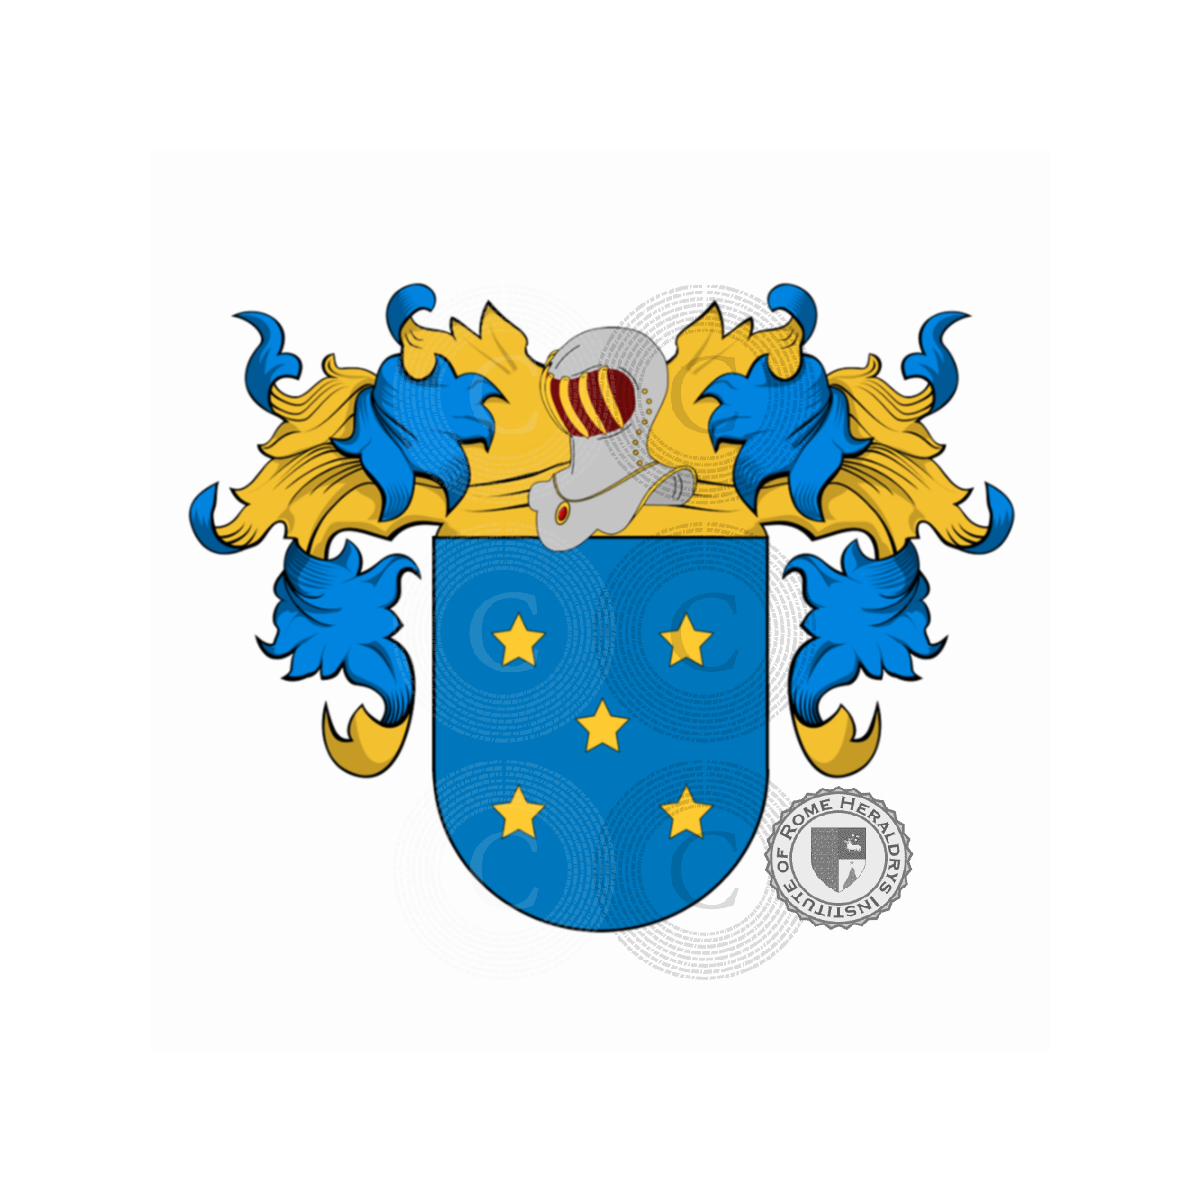 Wappen der FamilieMacedo